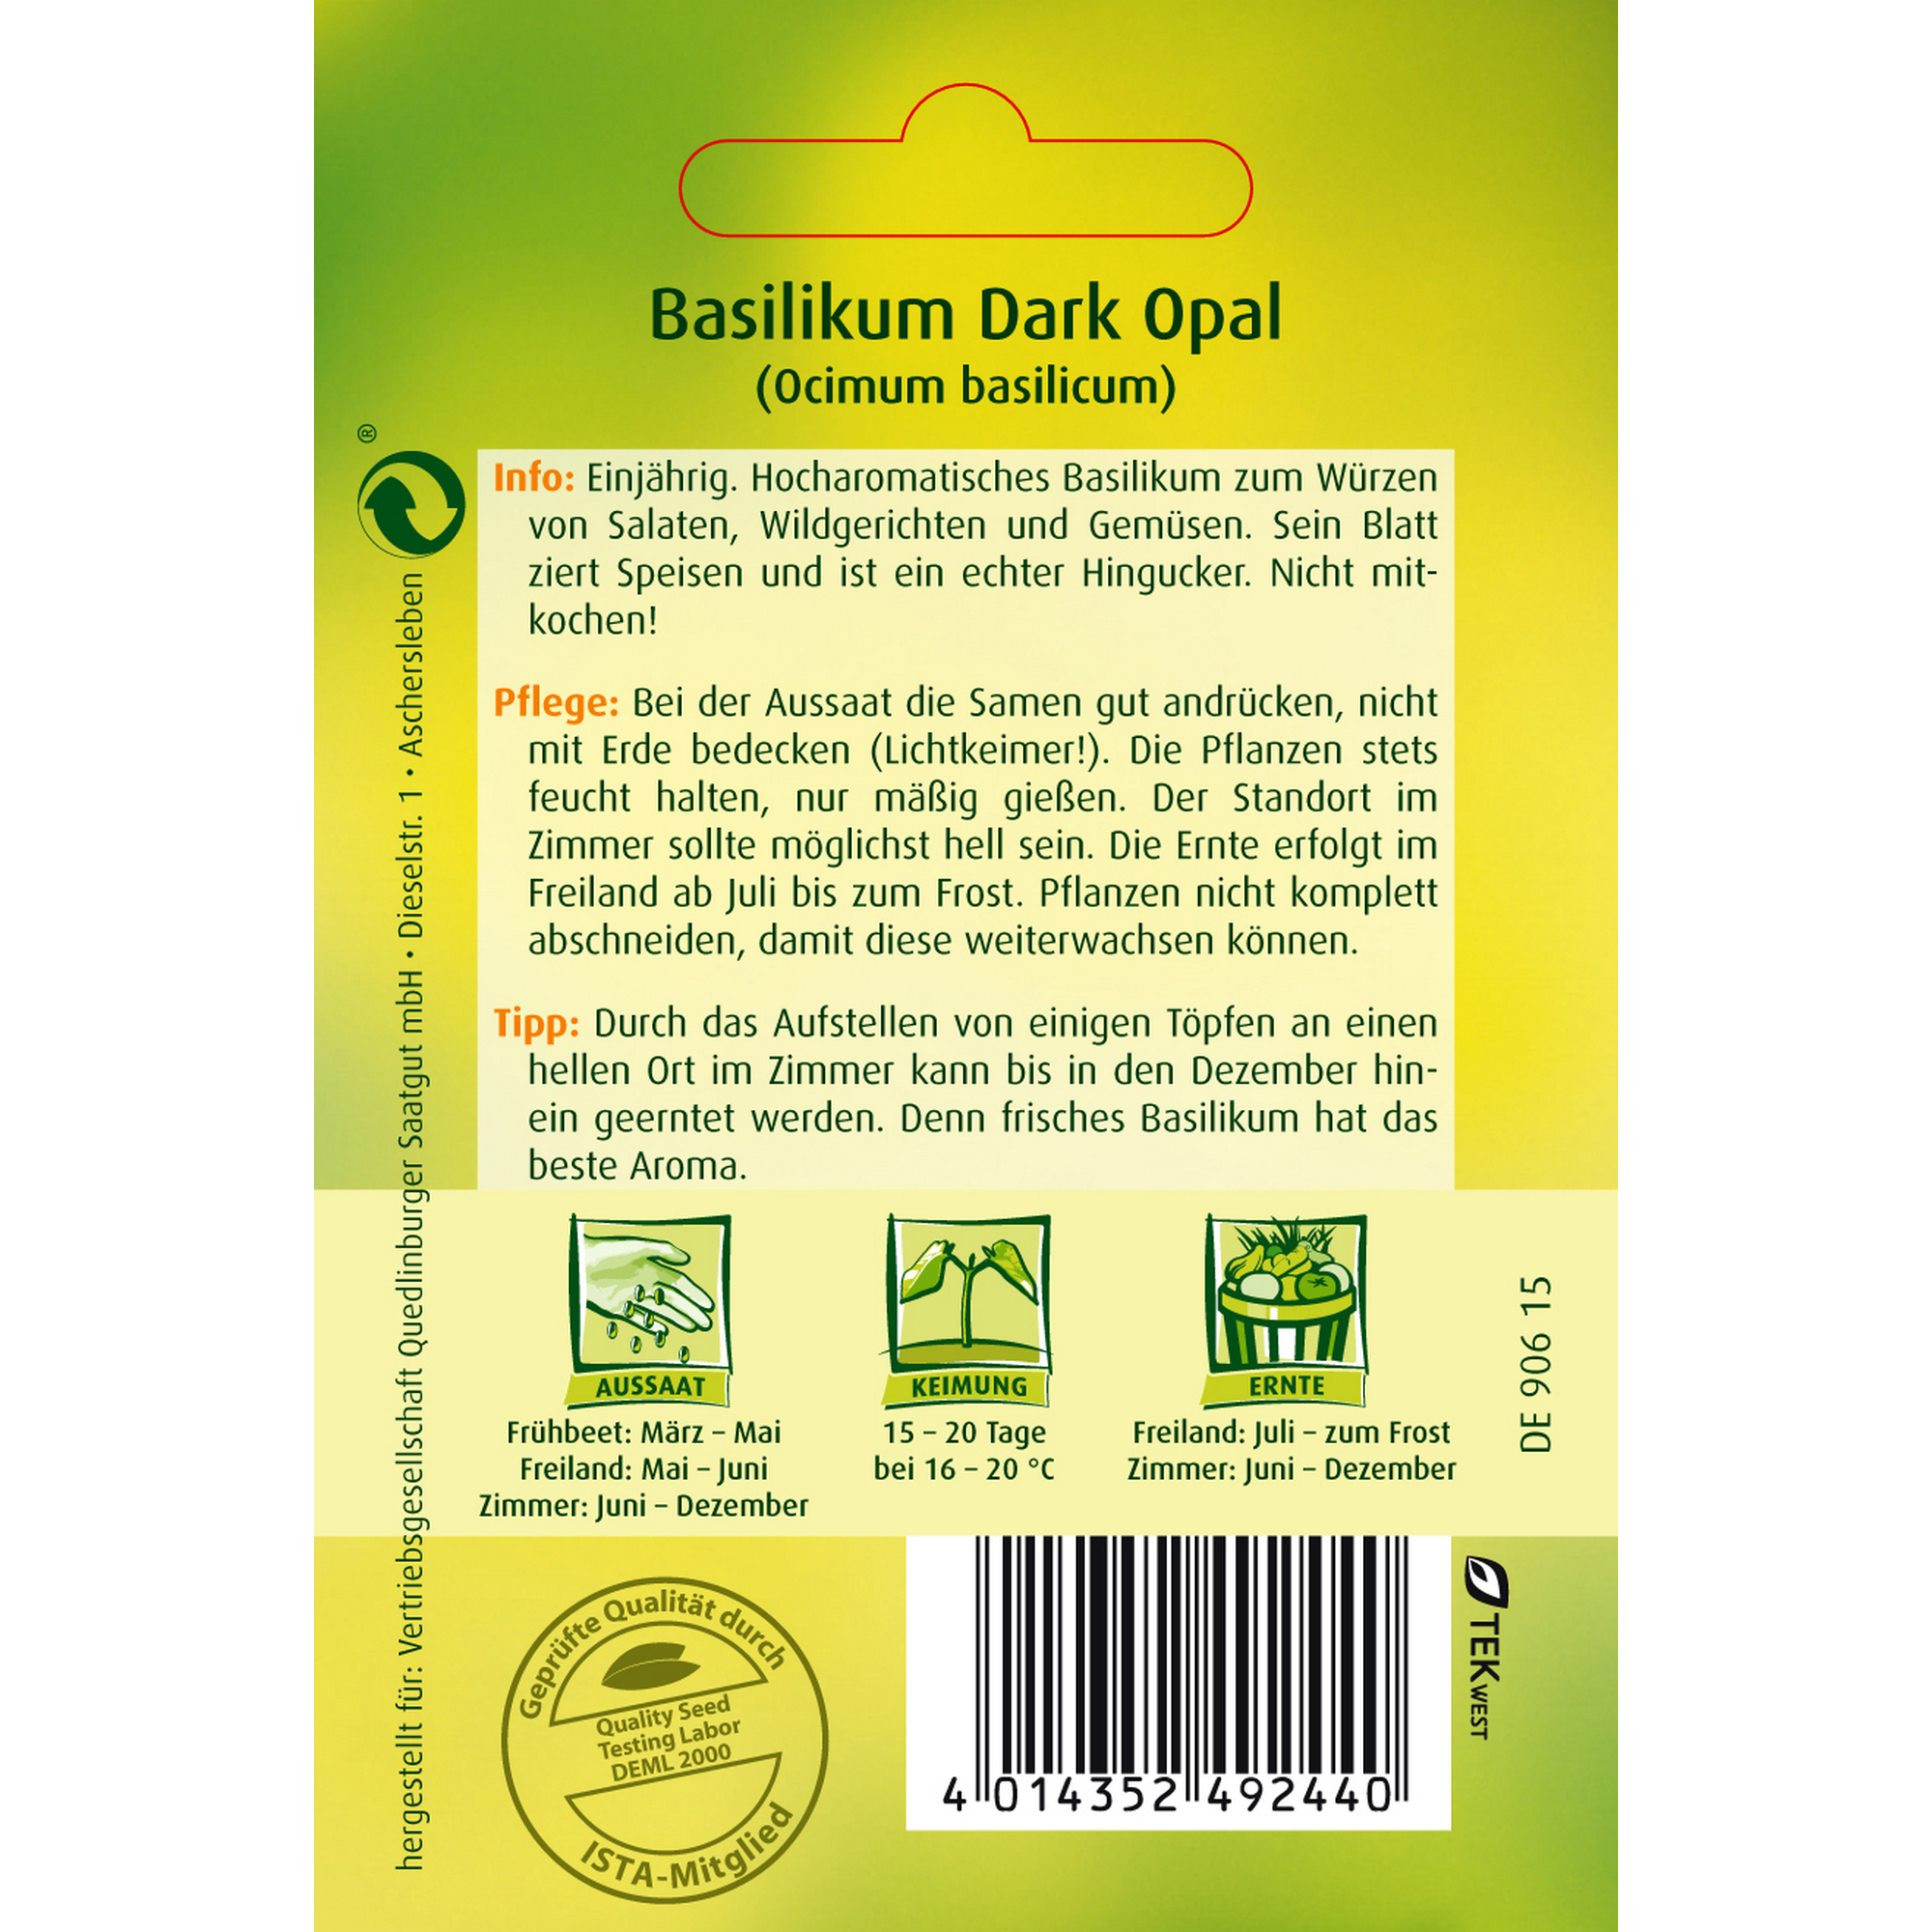 Basilikum Dark Opal + product picture